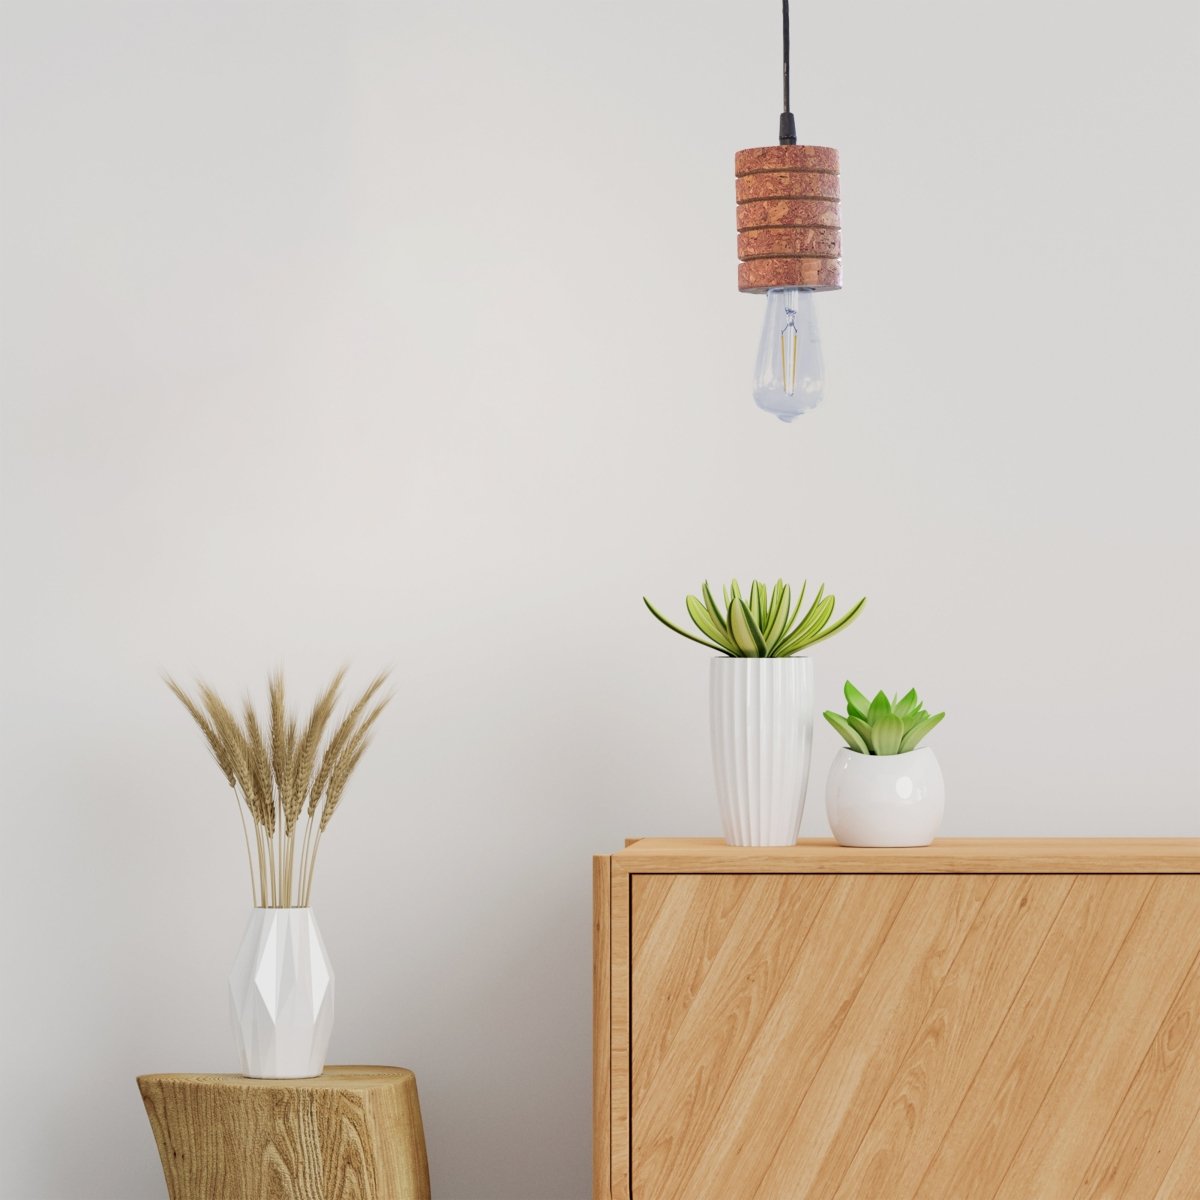 Kezevel Cork Decorative Hanging Light - Natural Cork Brown Cylindrical Ribbed Pendant Light for Living Room, Balcony, Foyer